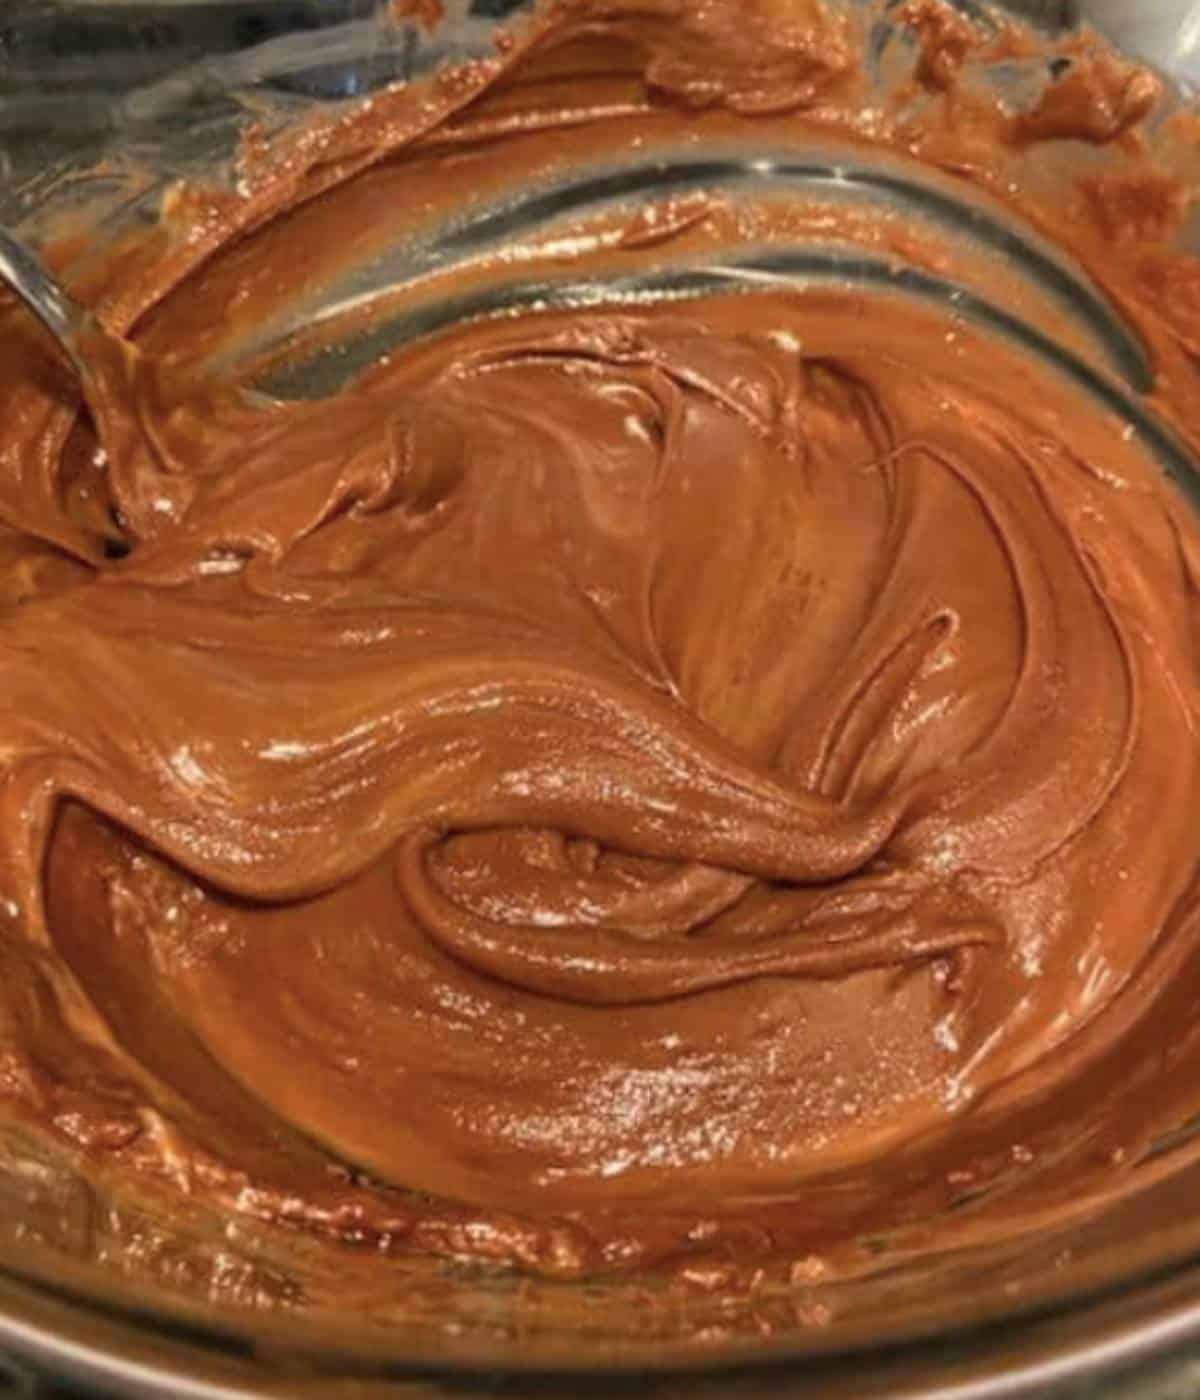 Chocolate peanut butter sauce for muddy buddies.